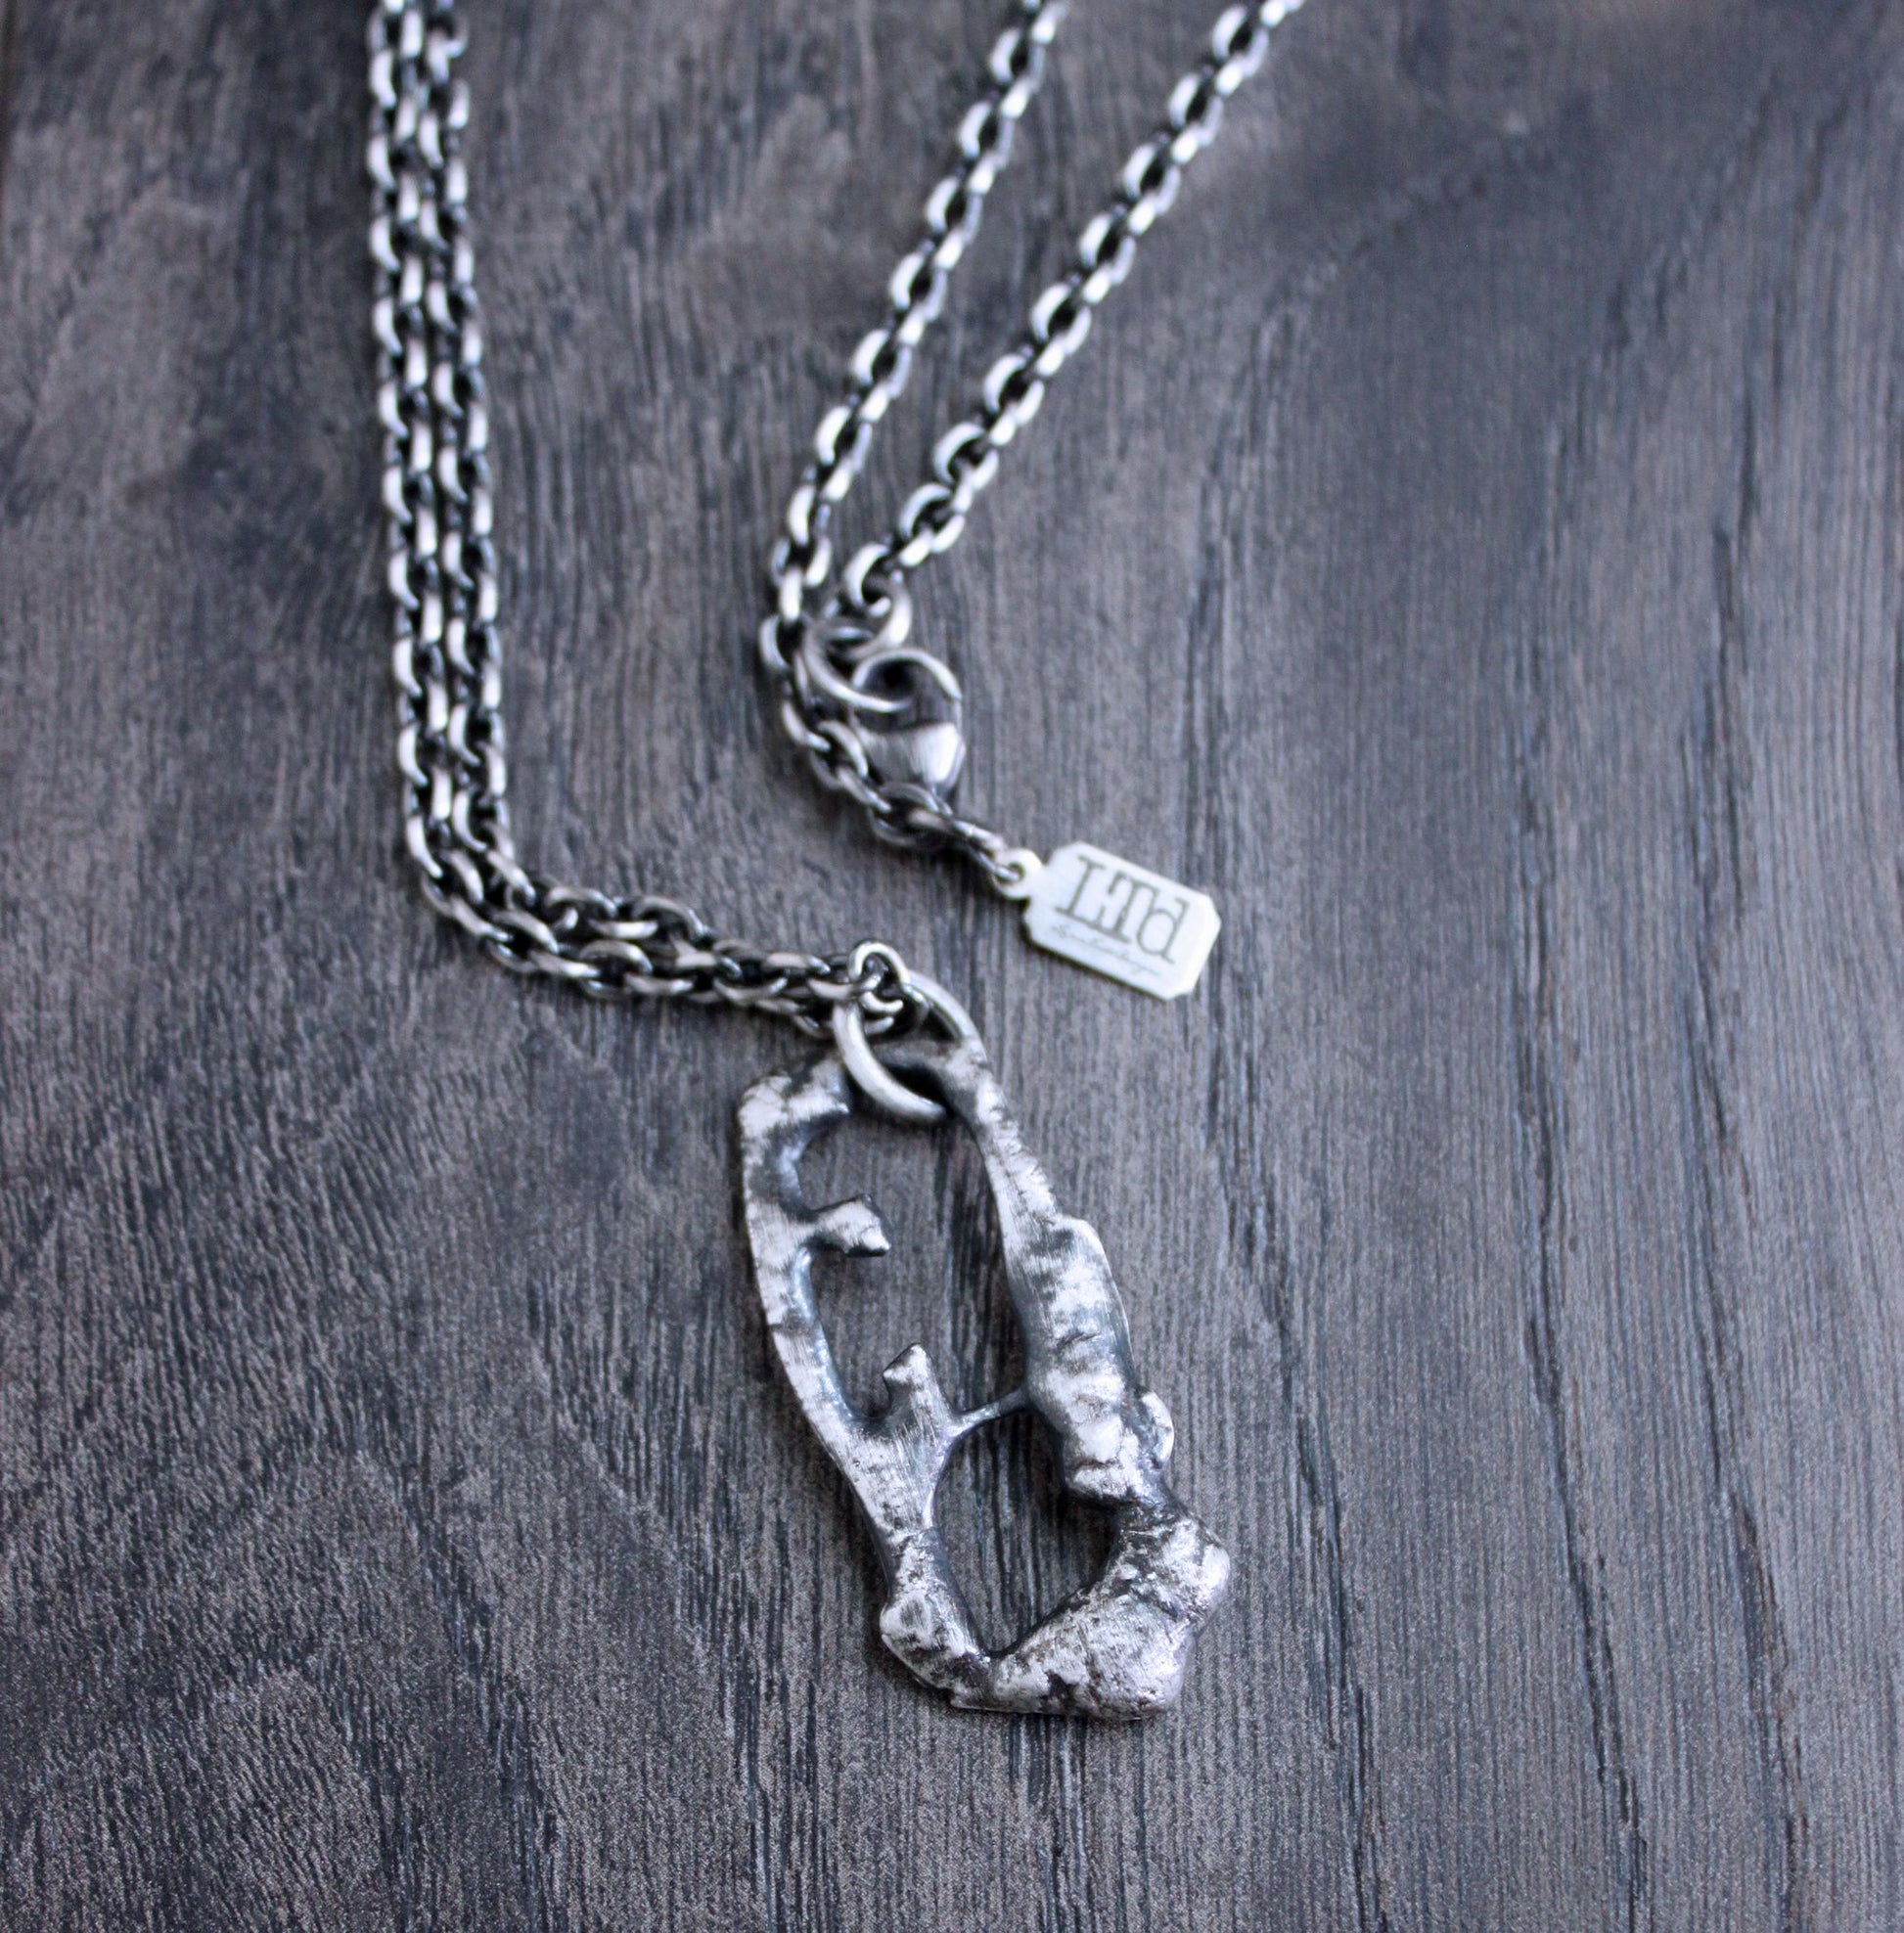 Rustic Silver Pendant Necklace